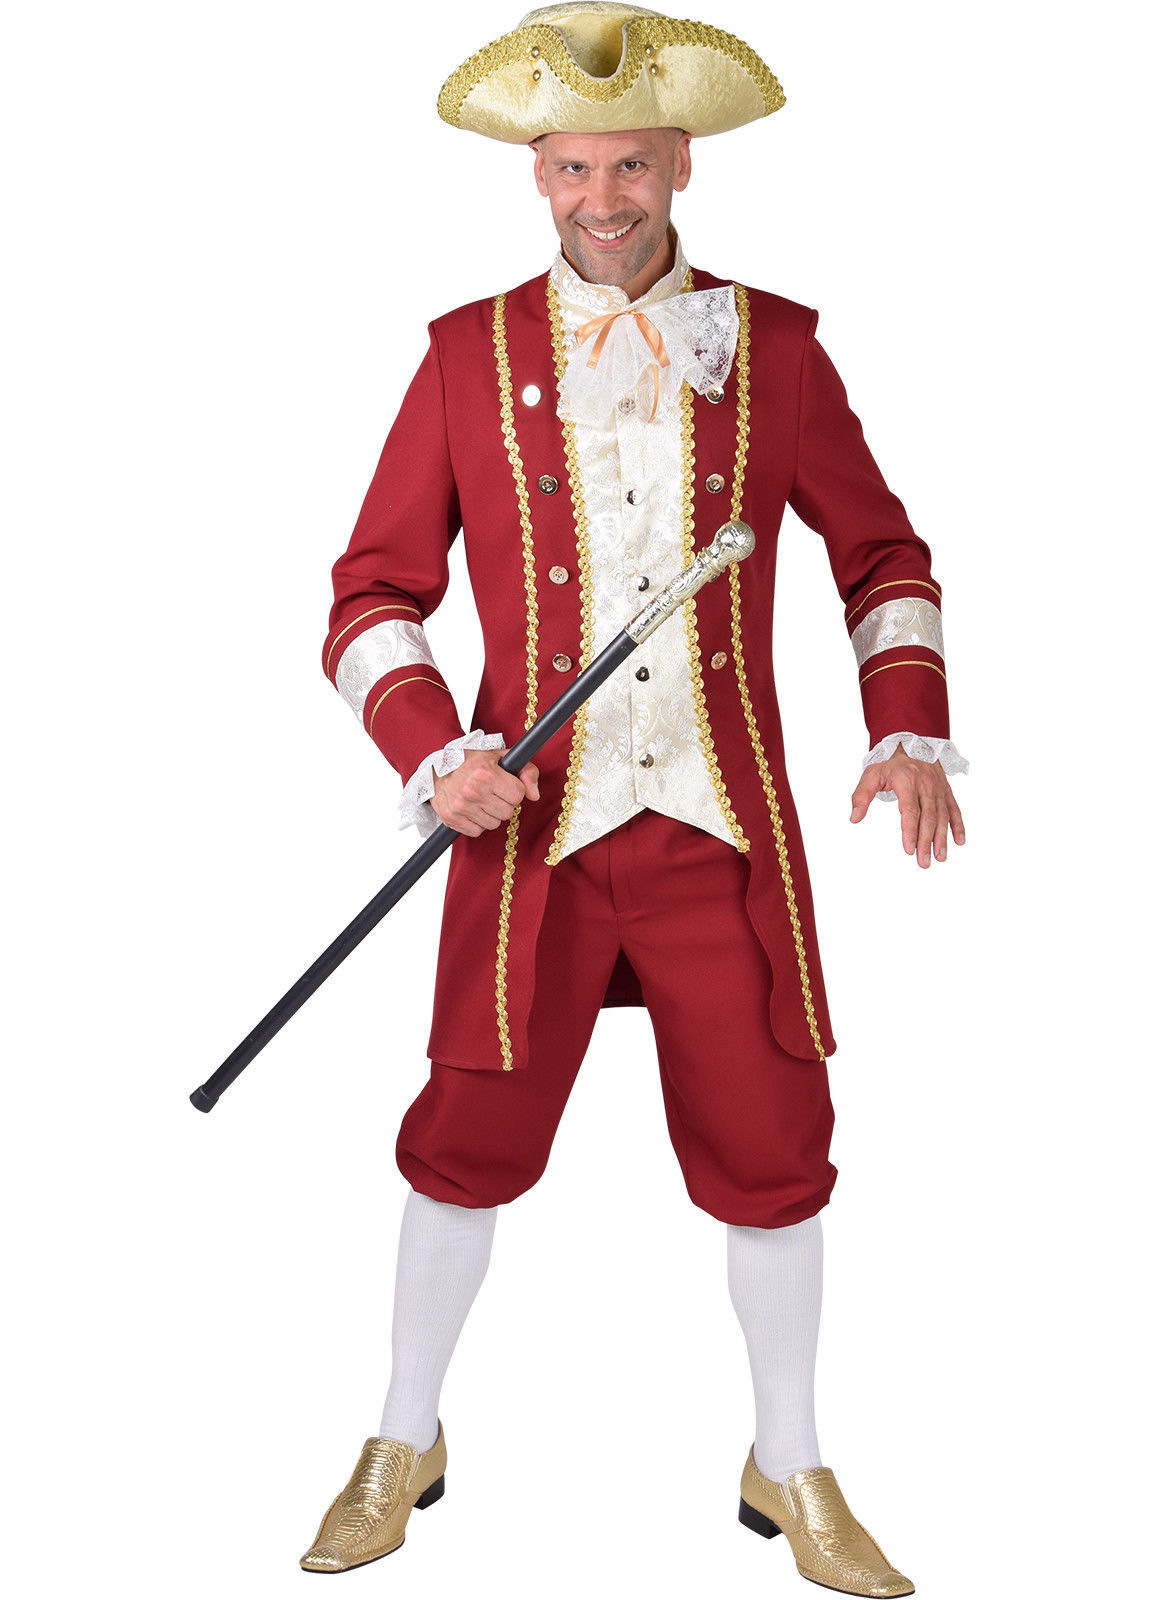 Pantomime Prince Charming Costume - Wine / Gold - Men